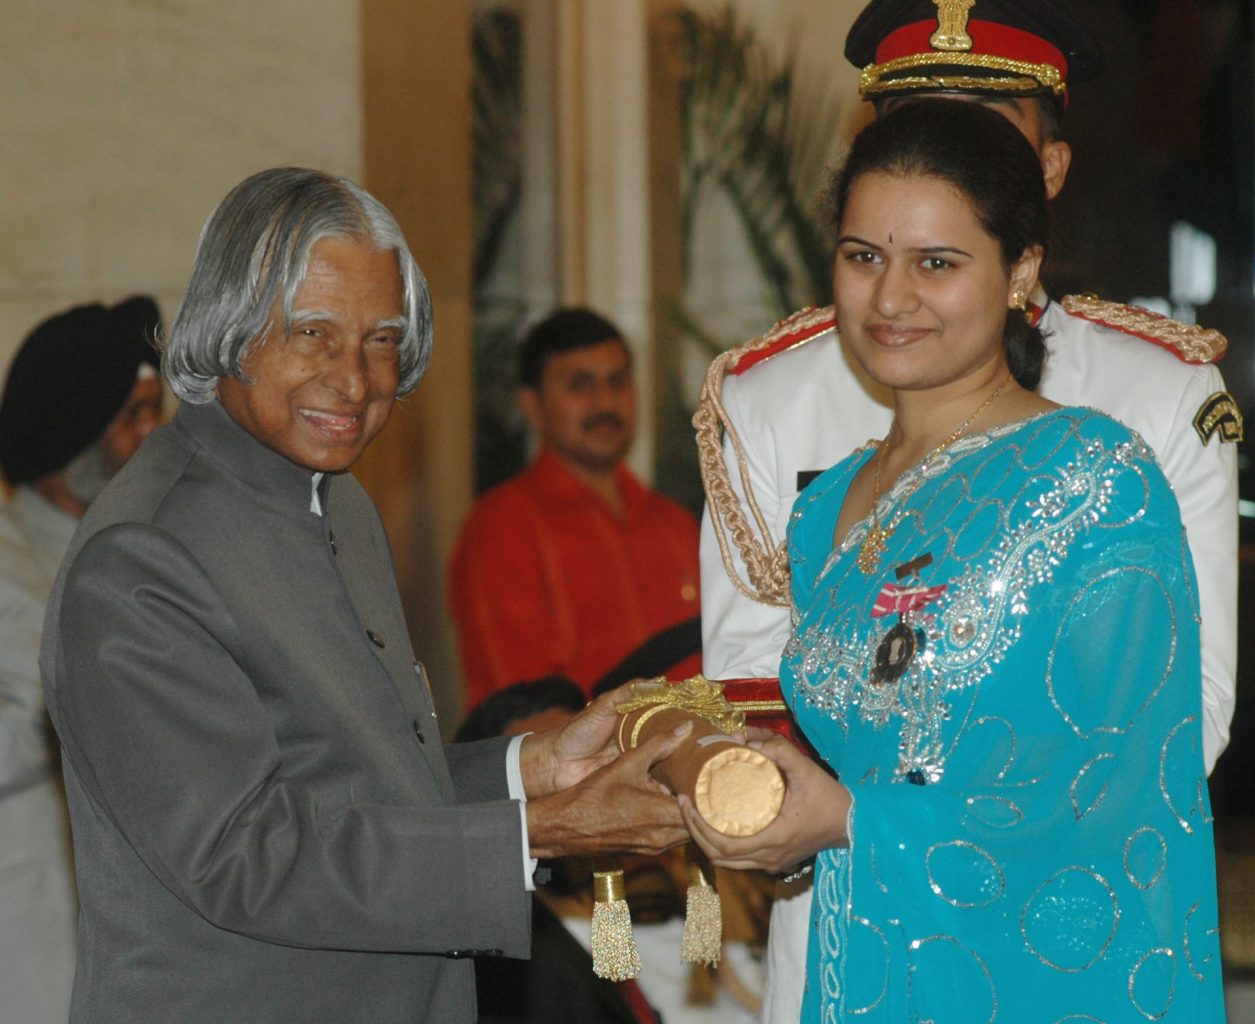 Koneryu Humpy receiving Padma Shree honour from former president of India, the late A.P.J. Abdul Kalam